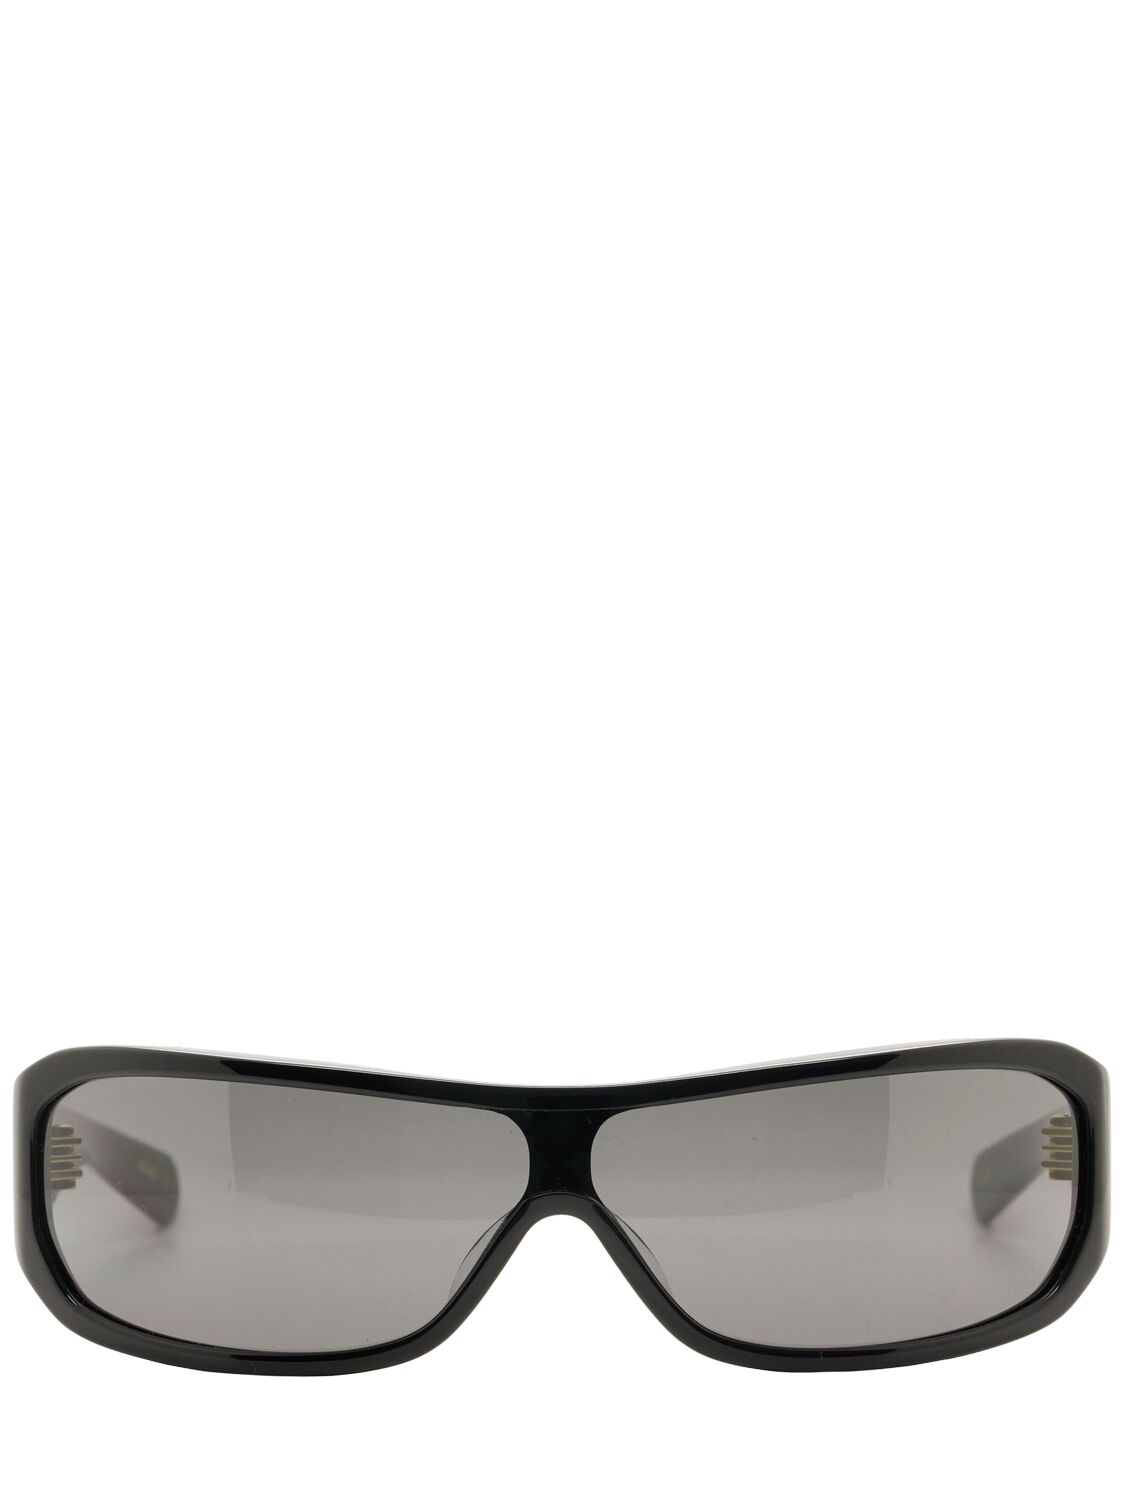 Flatlist Eyewear Zoe Acetate Sunglasses W/ Black Lenses